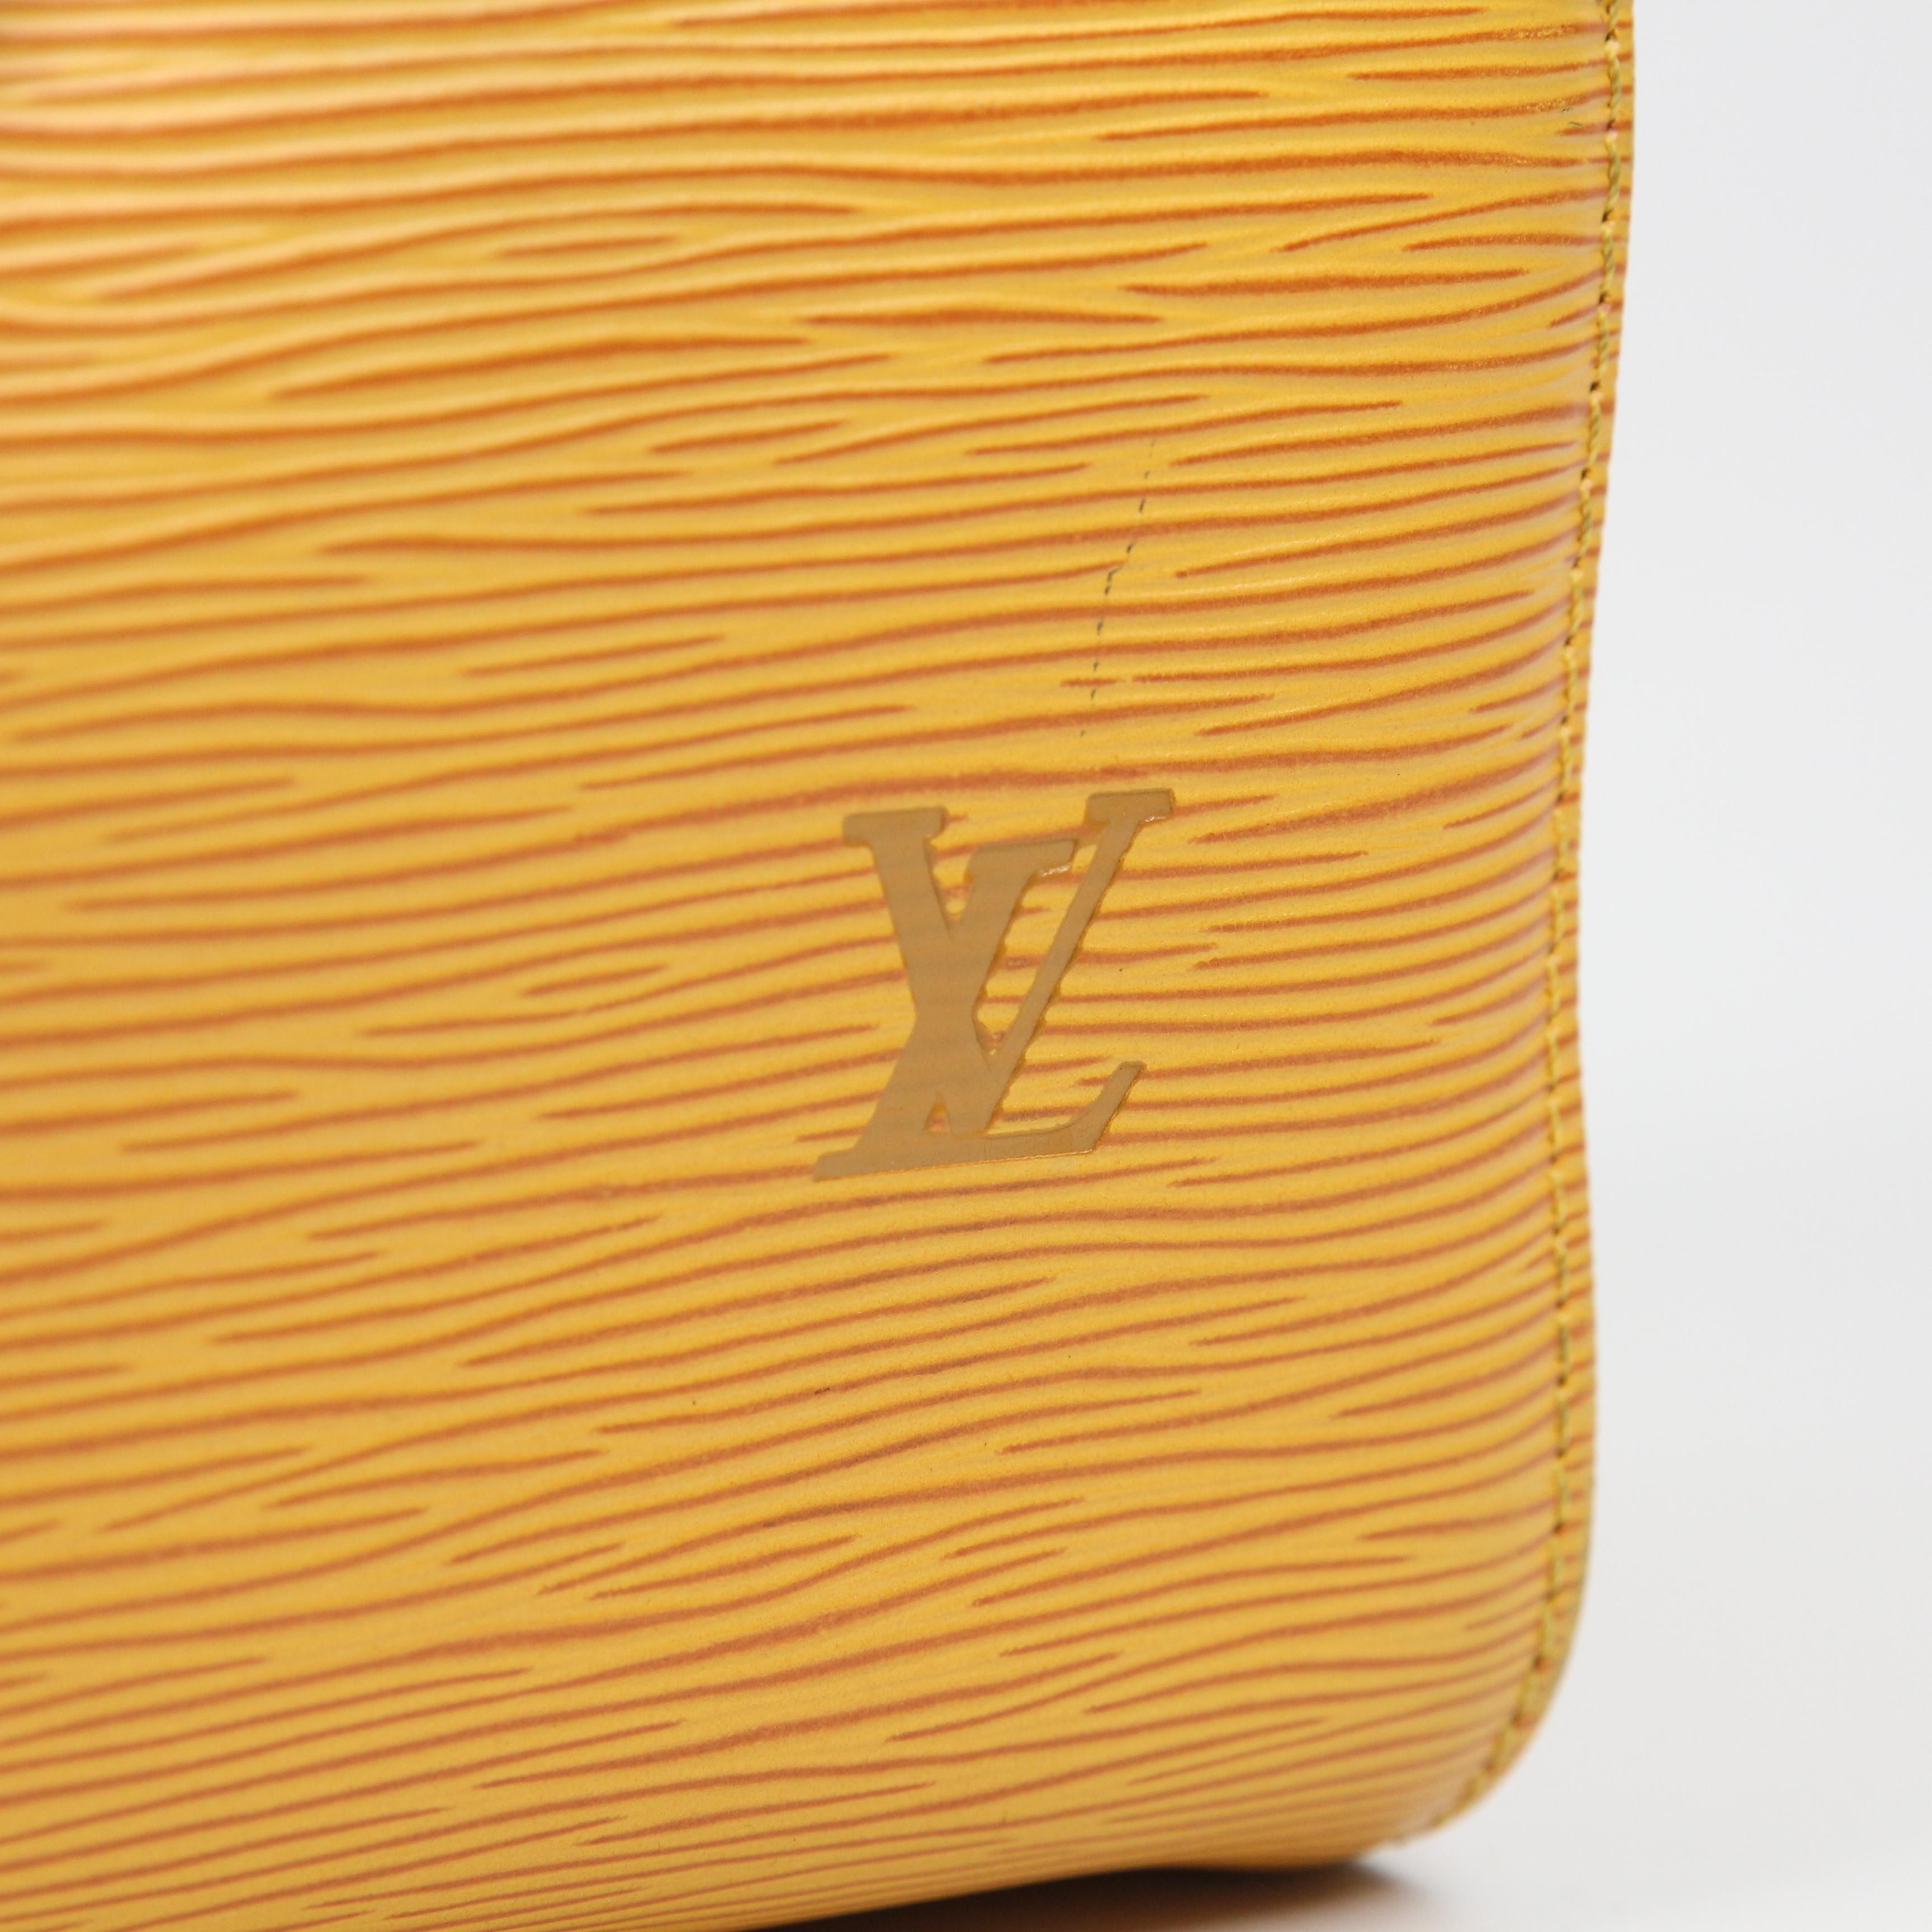 Louis Vuitton Speedy 25 leather handbag For Sale 11